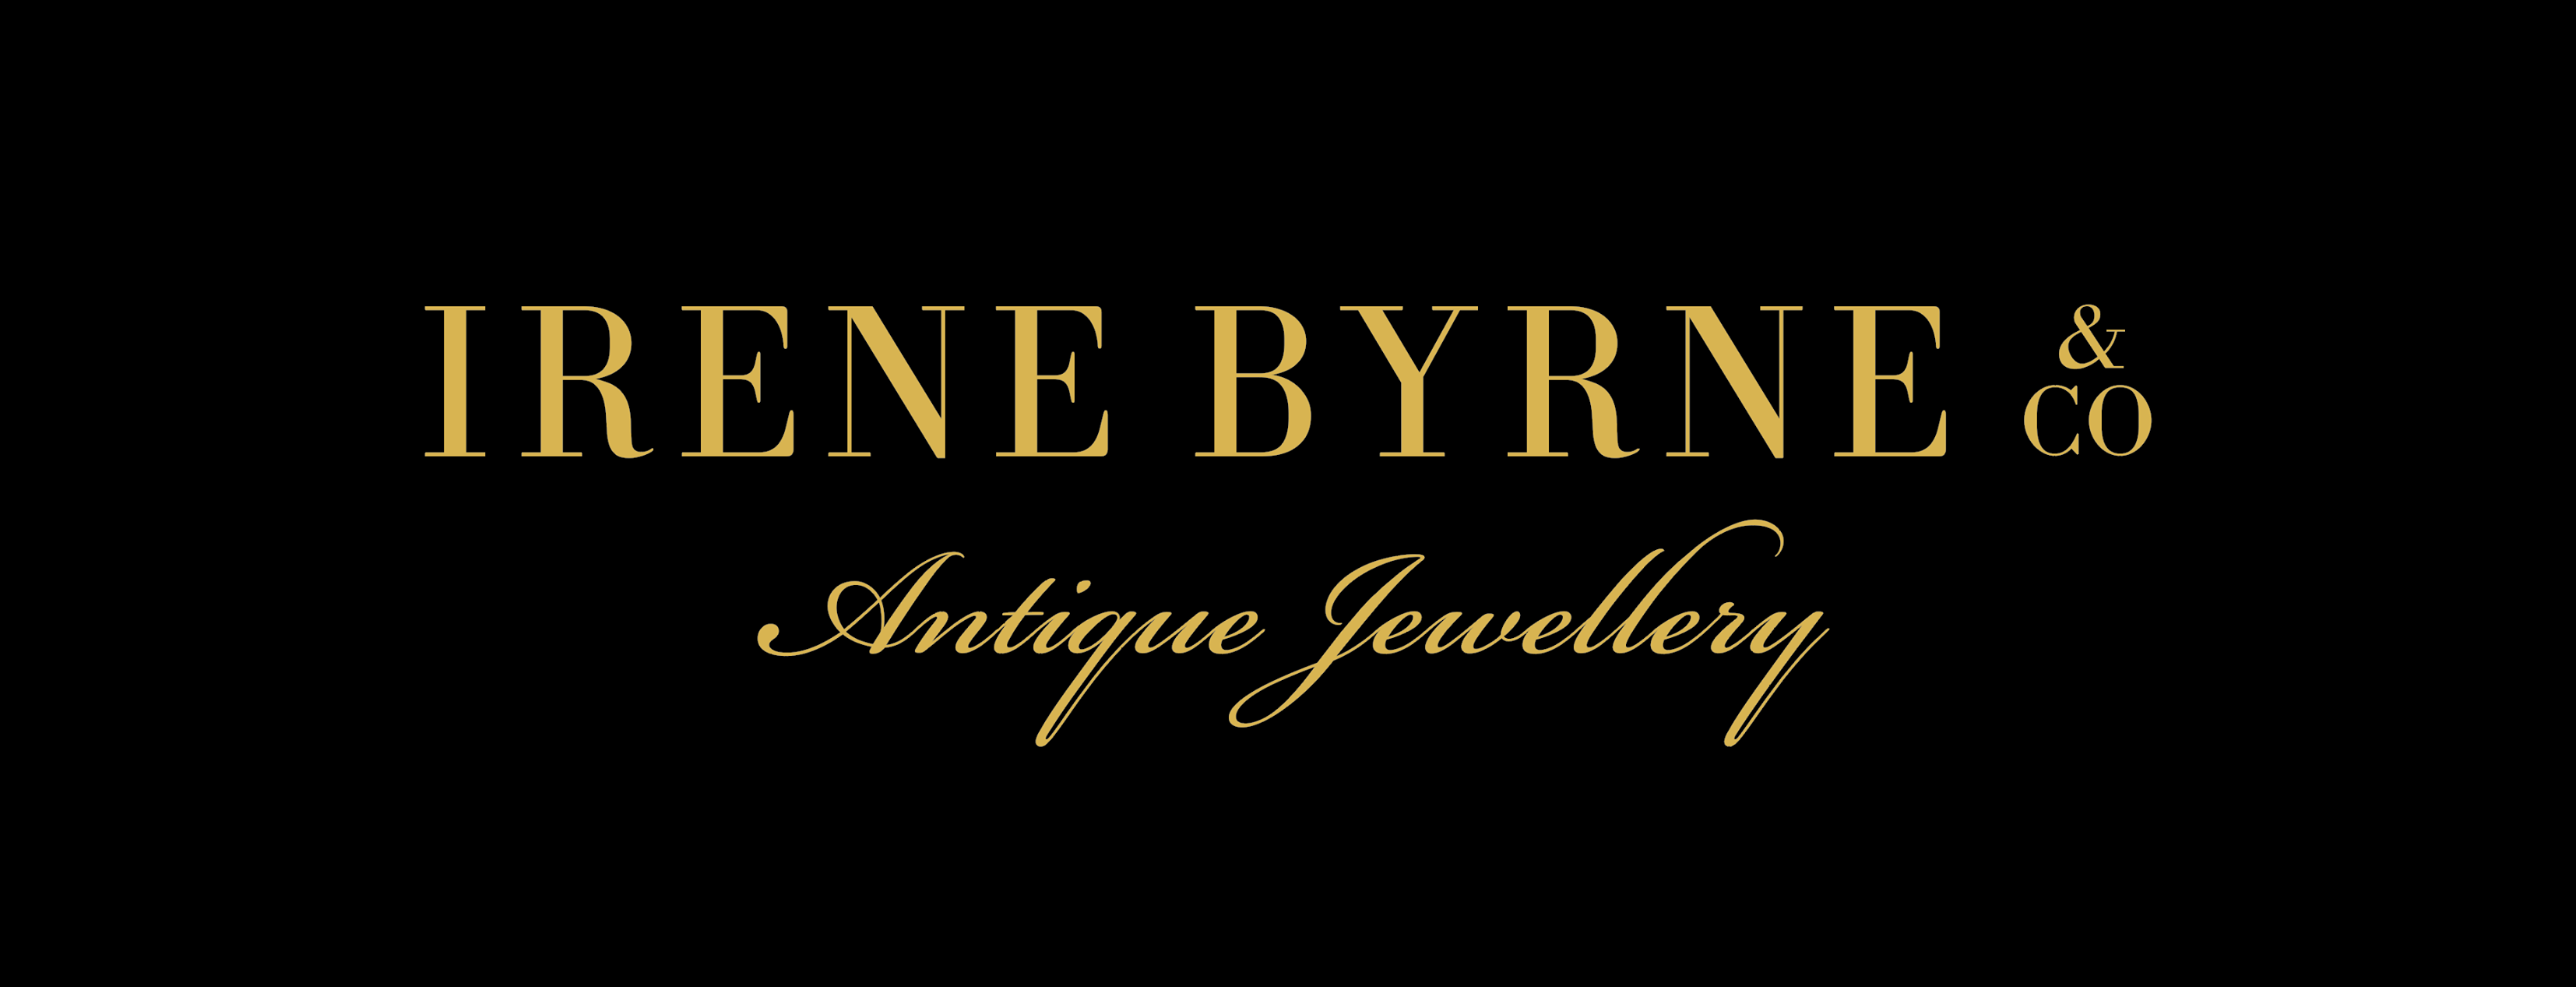 Company logo of Irene Byrne & Co